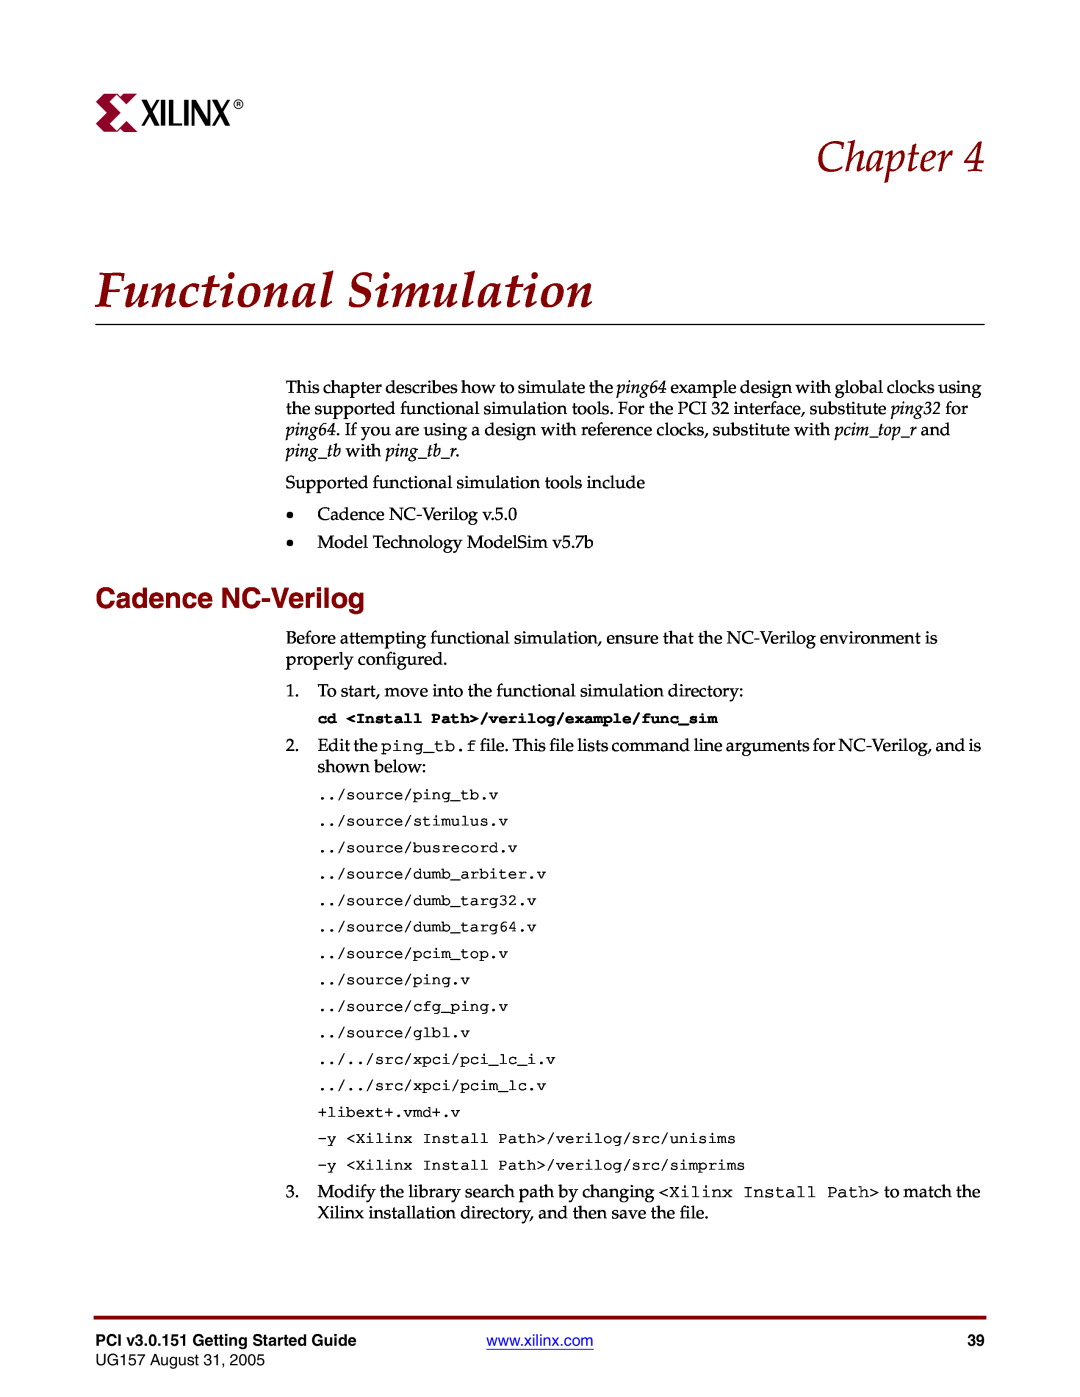 Xilinx PCI v3.0 manual Functional Simulation, Cadence NC-Verilog, Chapter 